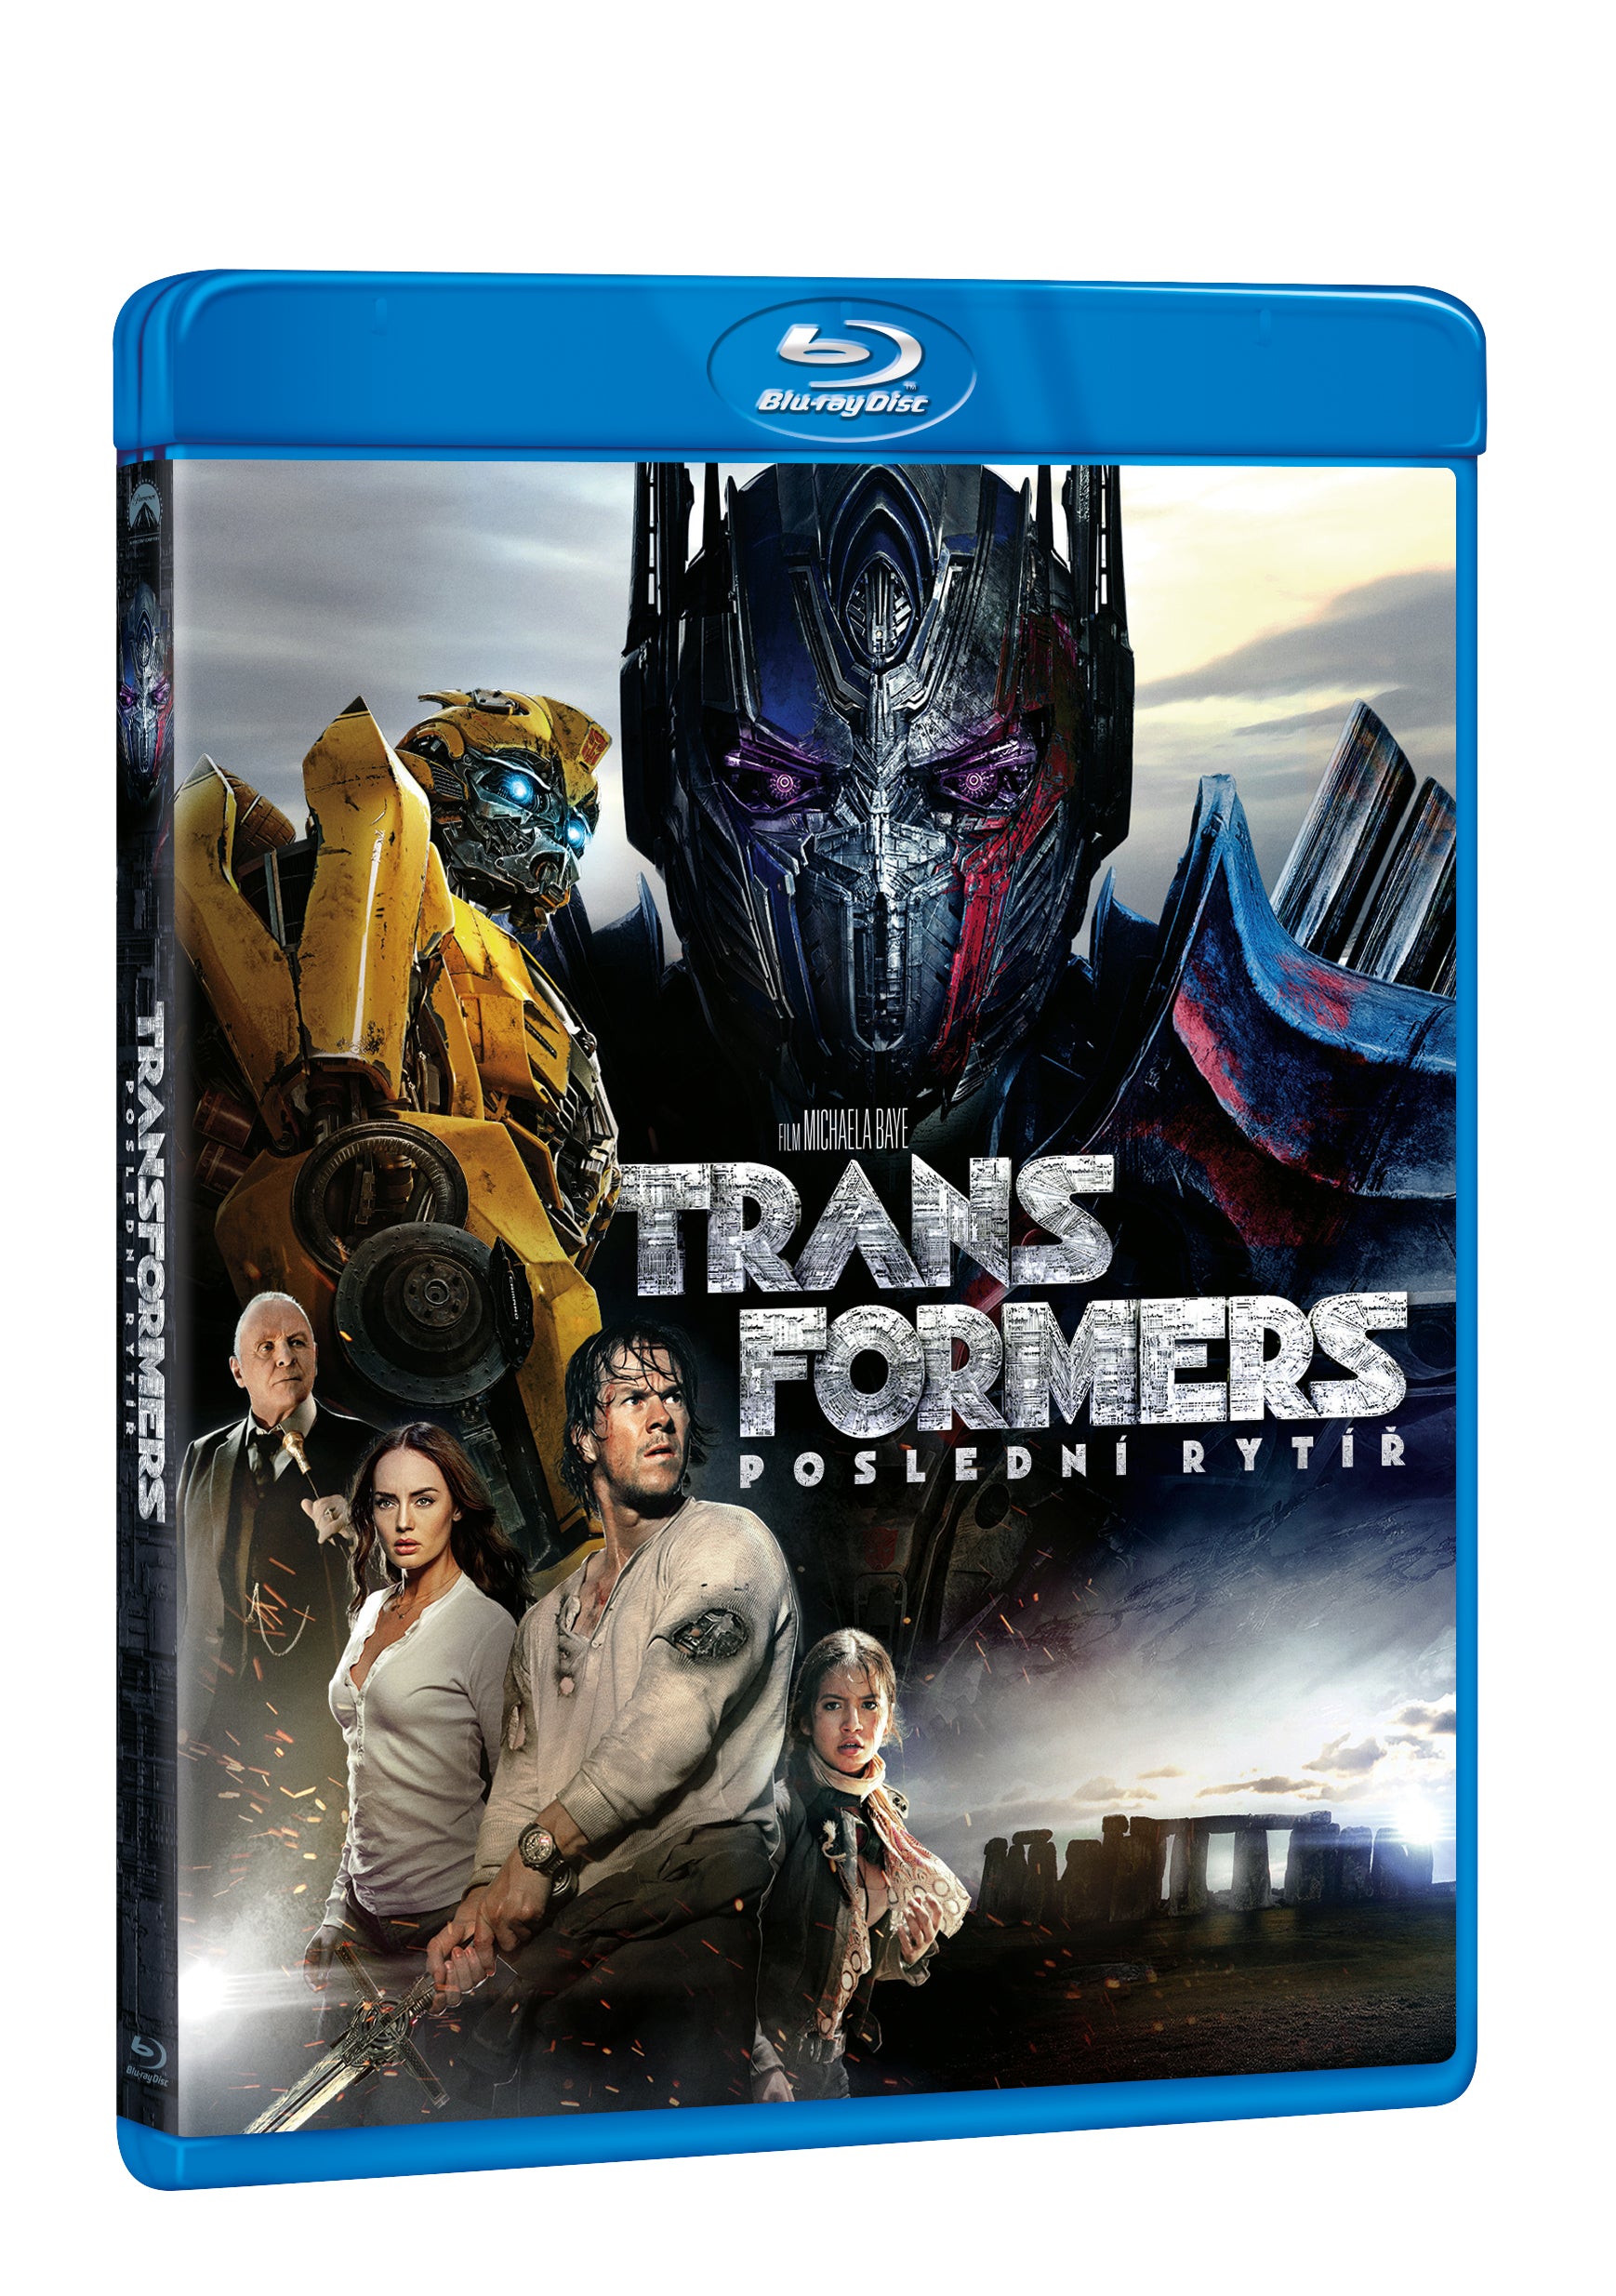 Transformers: Posledni rytir BD / Transformers: The Last Knight - Czech version